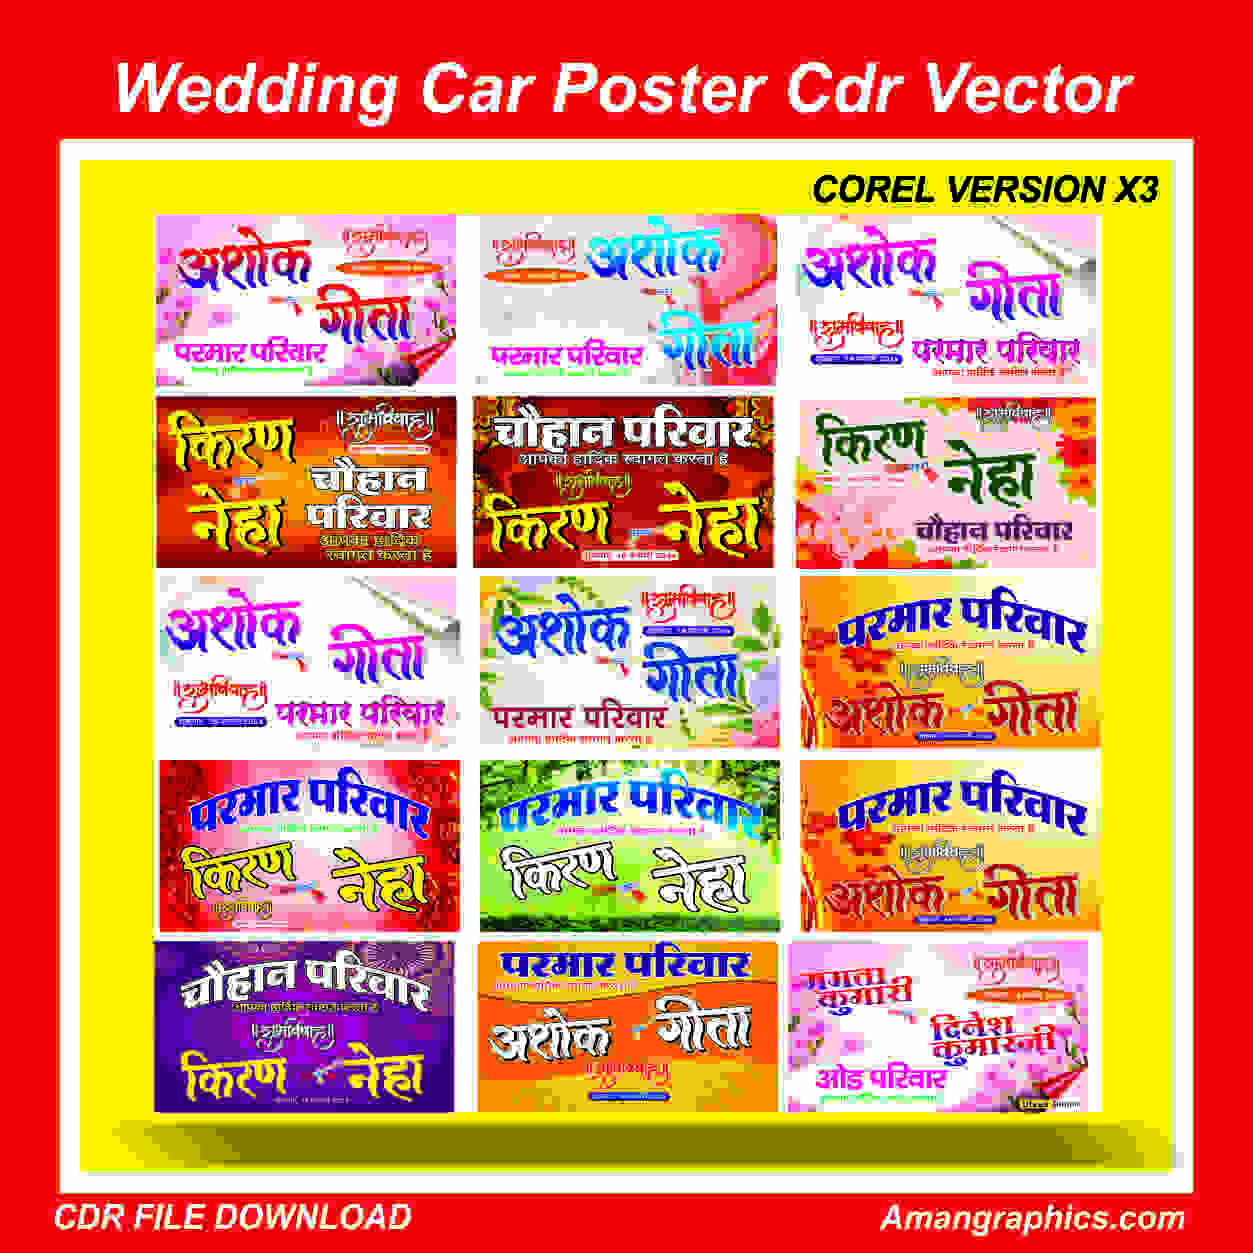 Wedding Car Poster Cdr Vector STICKER CAR STIKCER